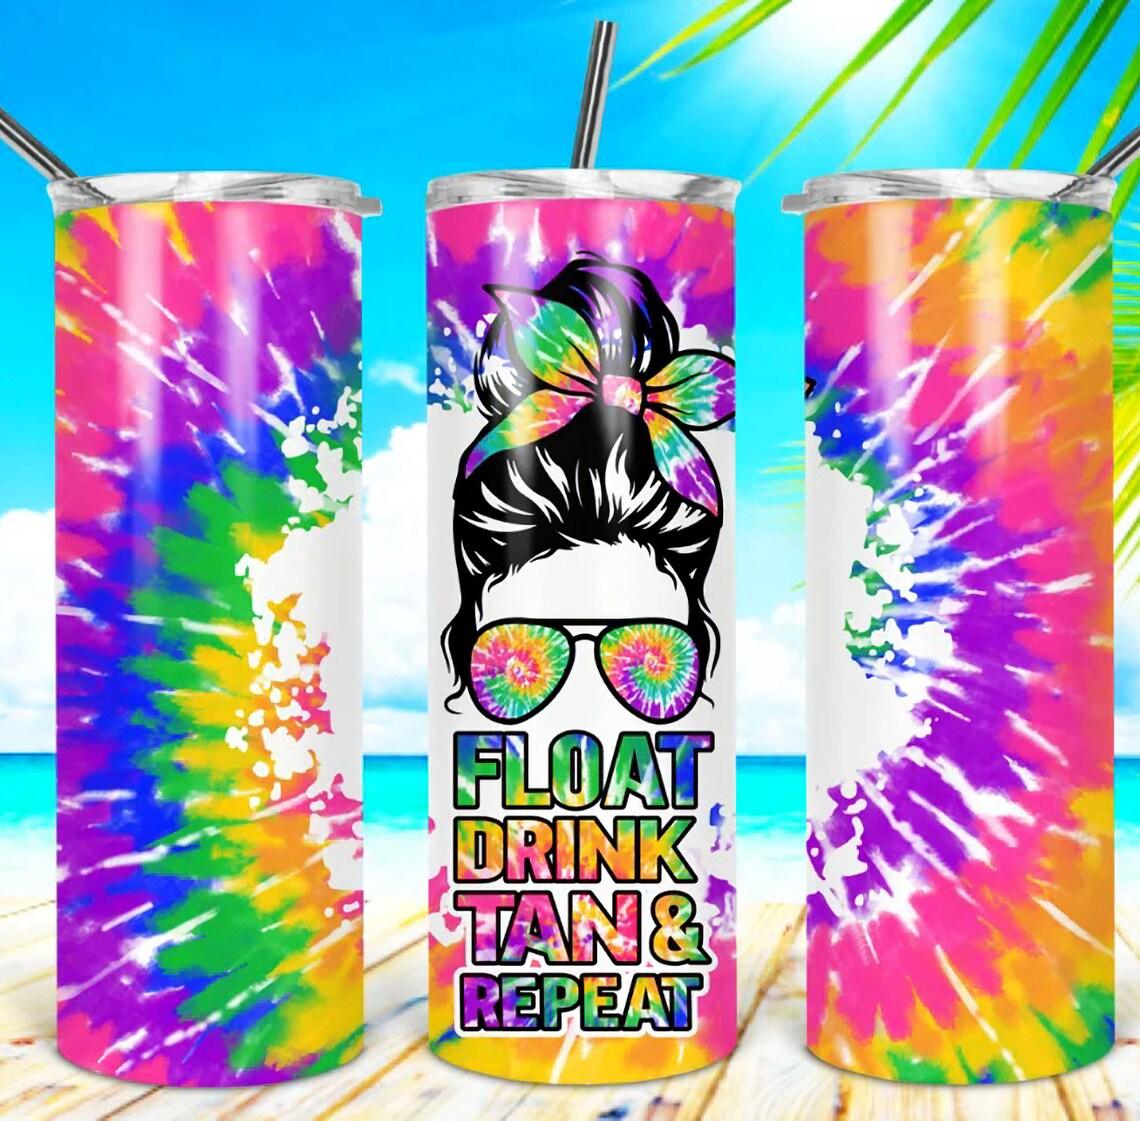 Float Drink Tan & Repeat Pinks Tumbler OR 4 in 1 Can Cooler – Emerald Isle  Design